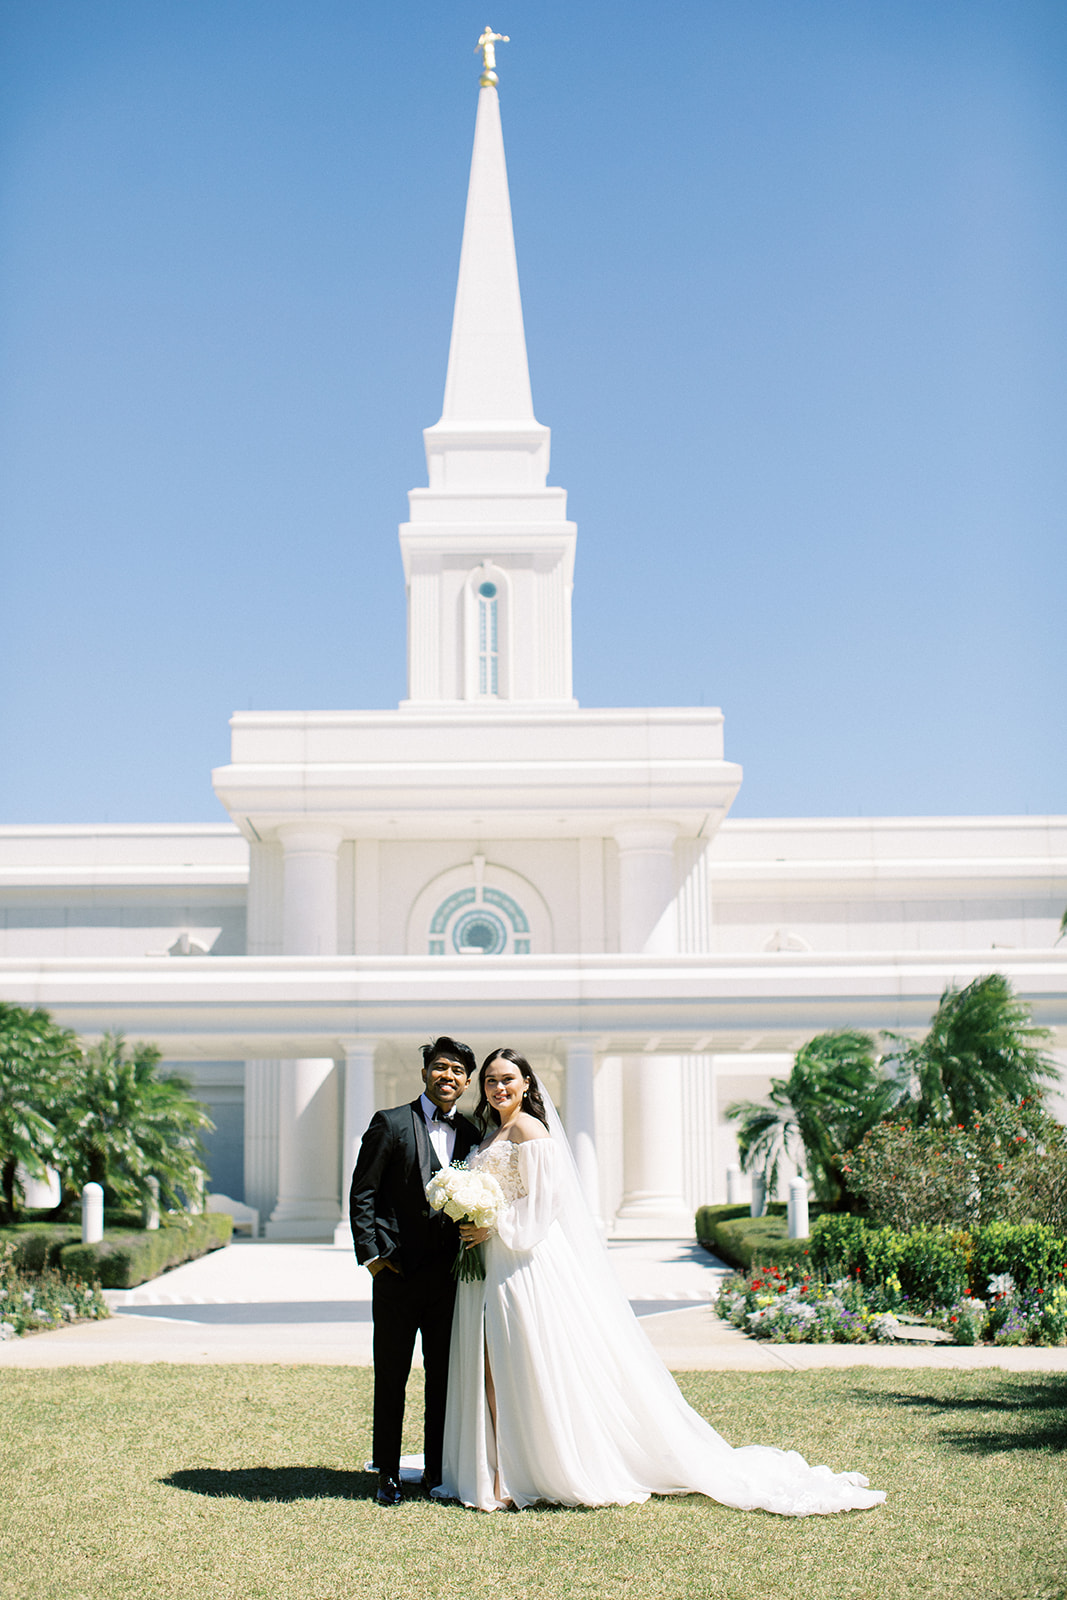 Orlando Florida Temple Wedding